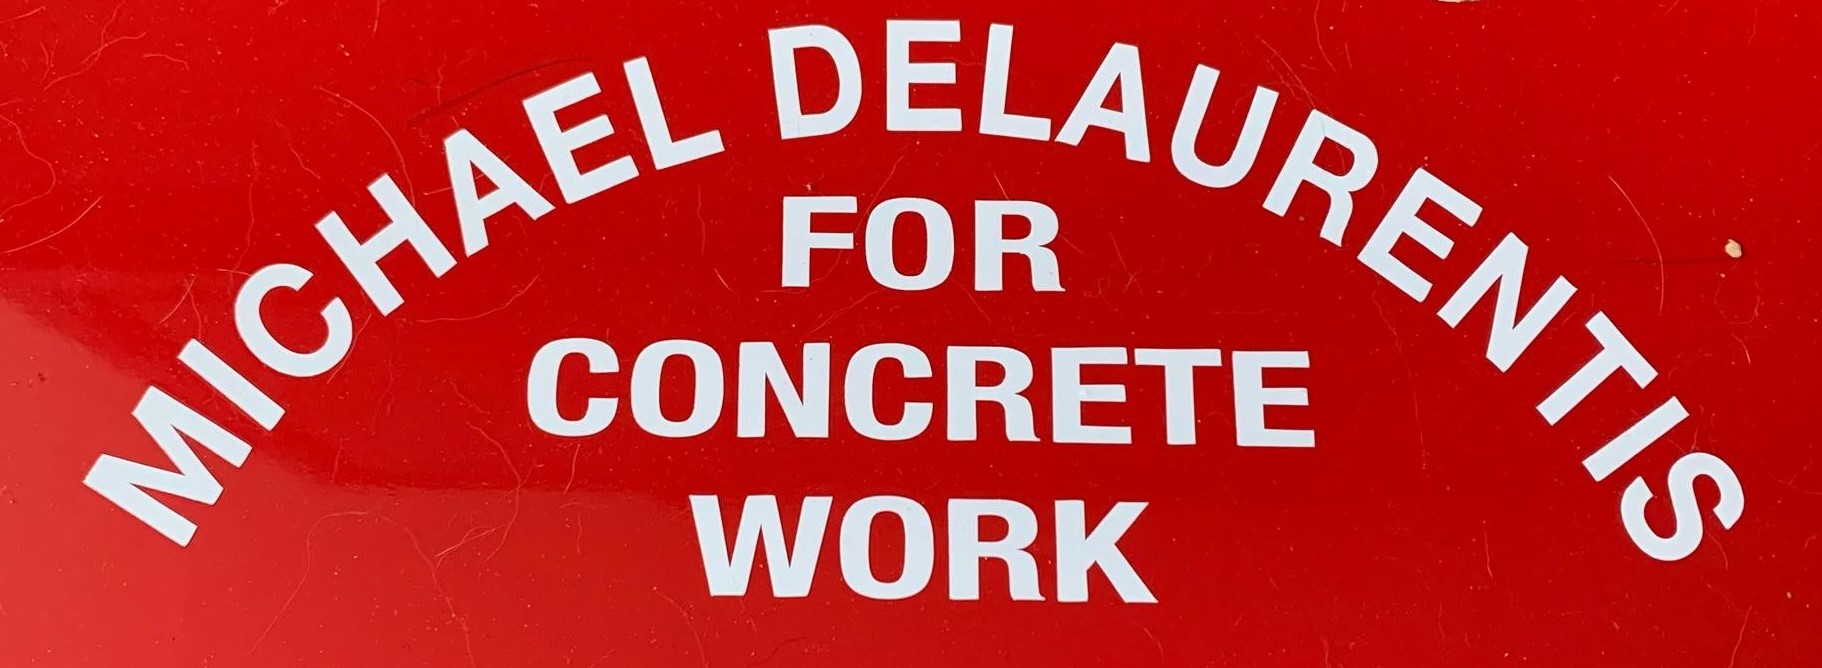 Michael Delaurentis For Concrete Work